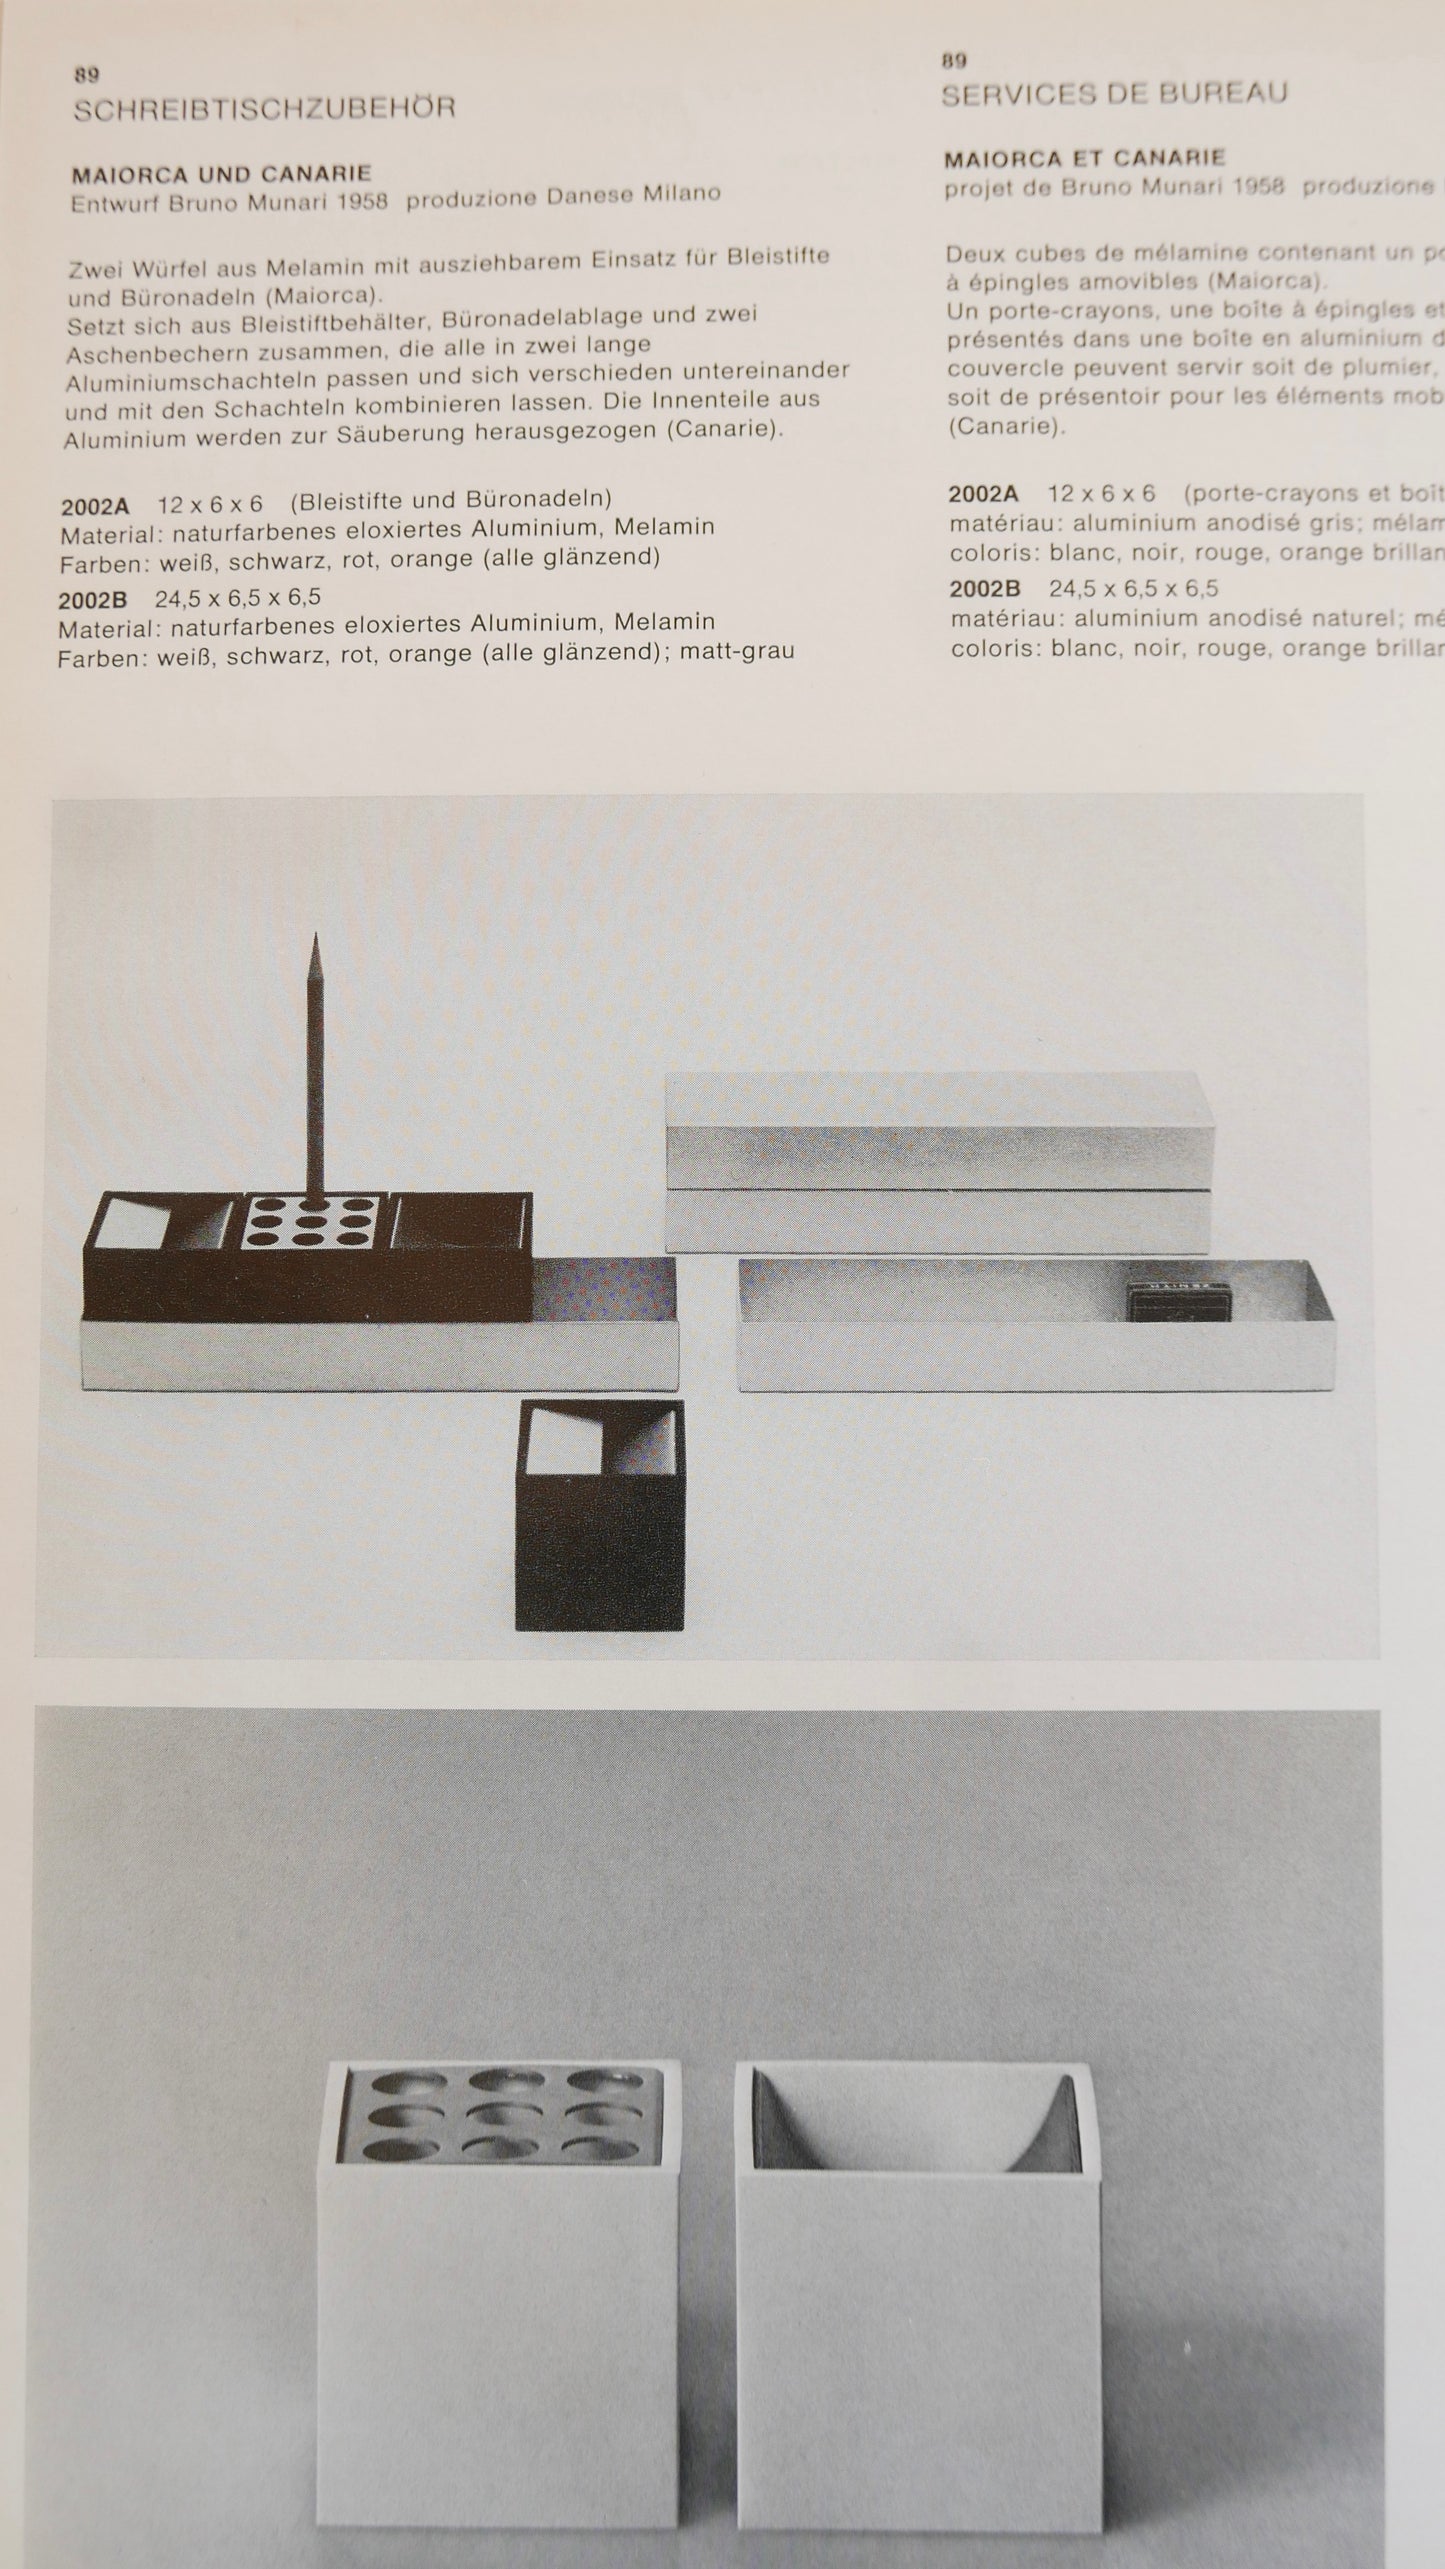 Desk sets by Bruno Munari for Danese Milano, 1958